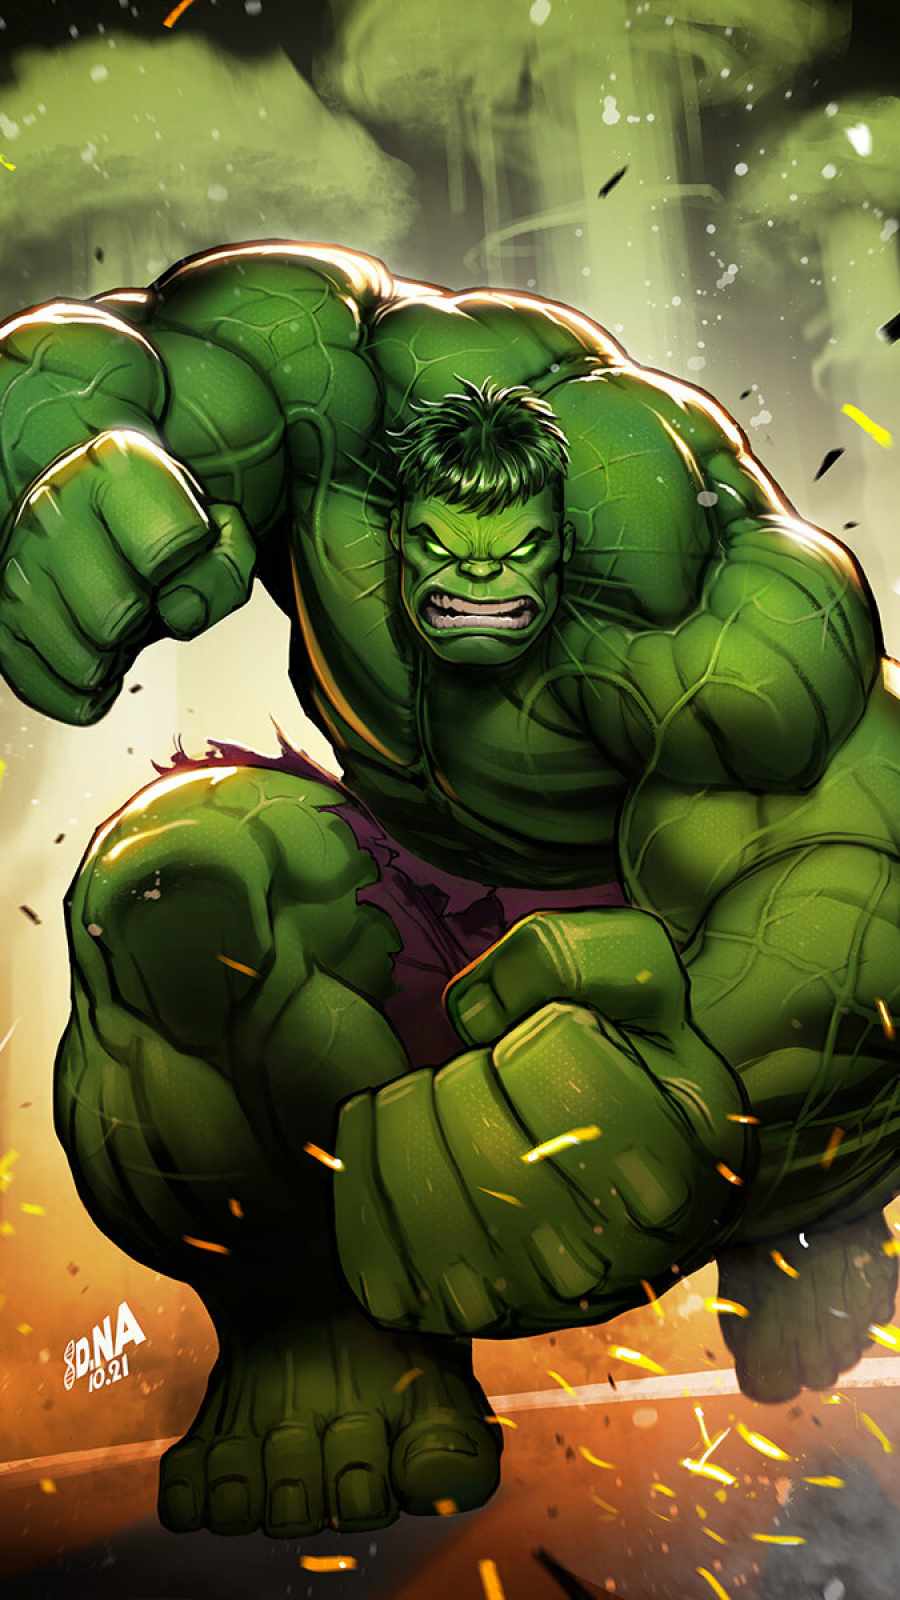 The Incredible Hulk IPhone Wallpaper - IPhone Wallpapers : iPhone Wallpapers